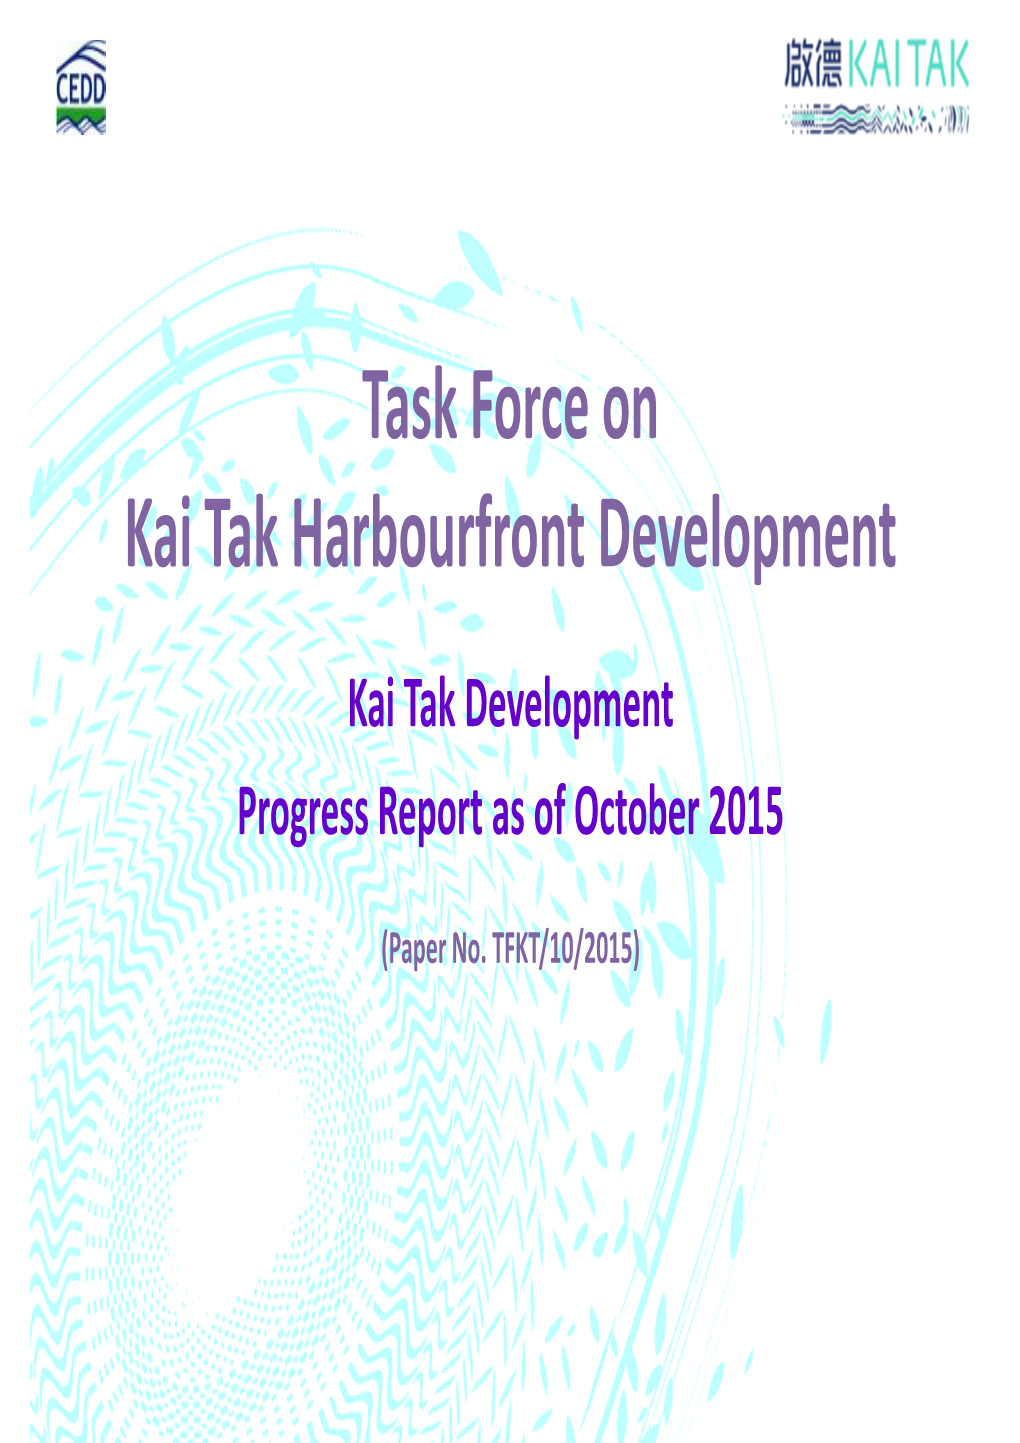 TFKT 10 2015 Kai Tak Development Progress Report